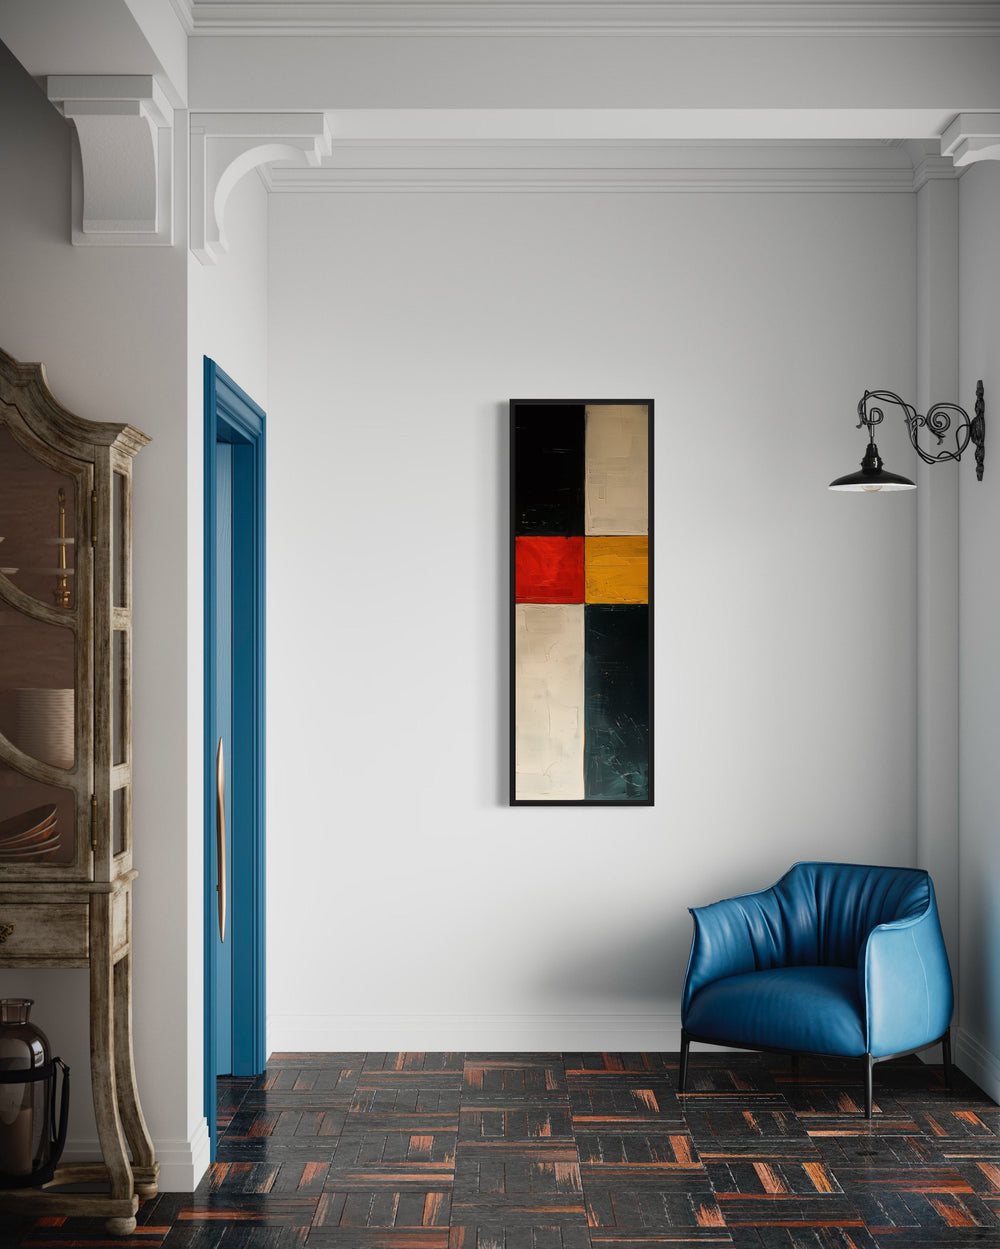 Tall Narrow Geometric Black White Red Vertical Wall Art in living room